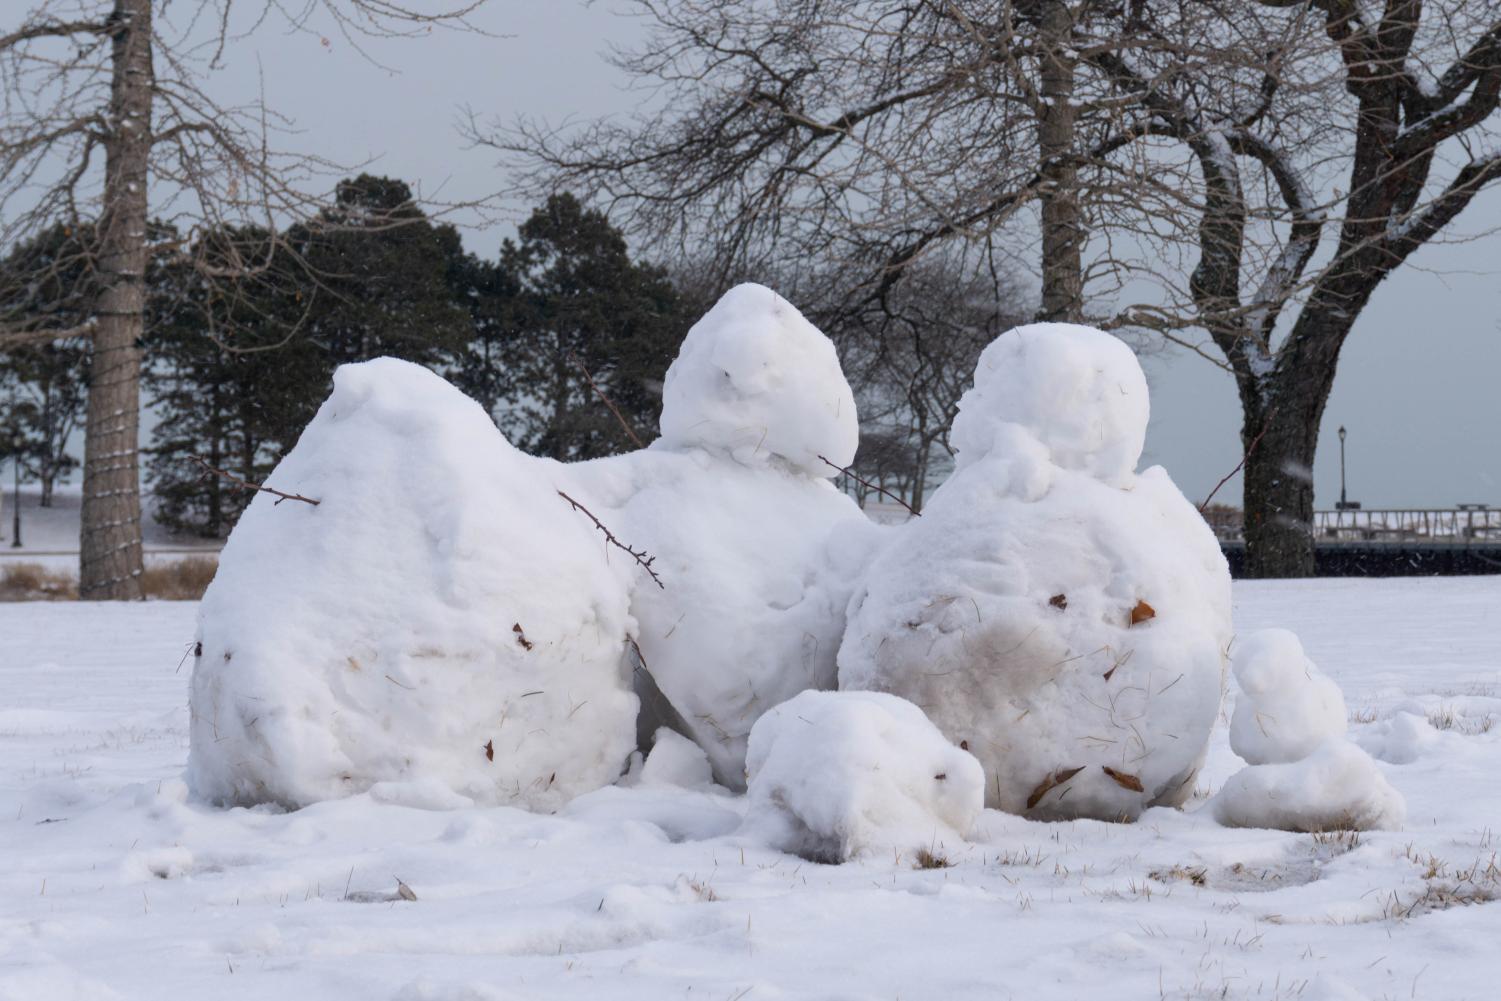 A group of snowmen.
